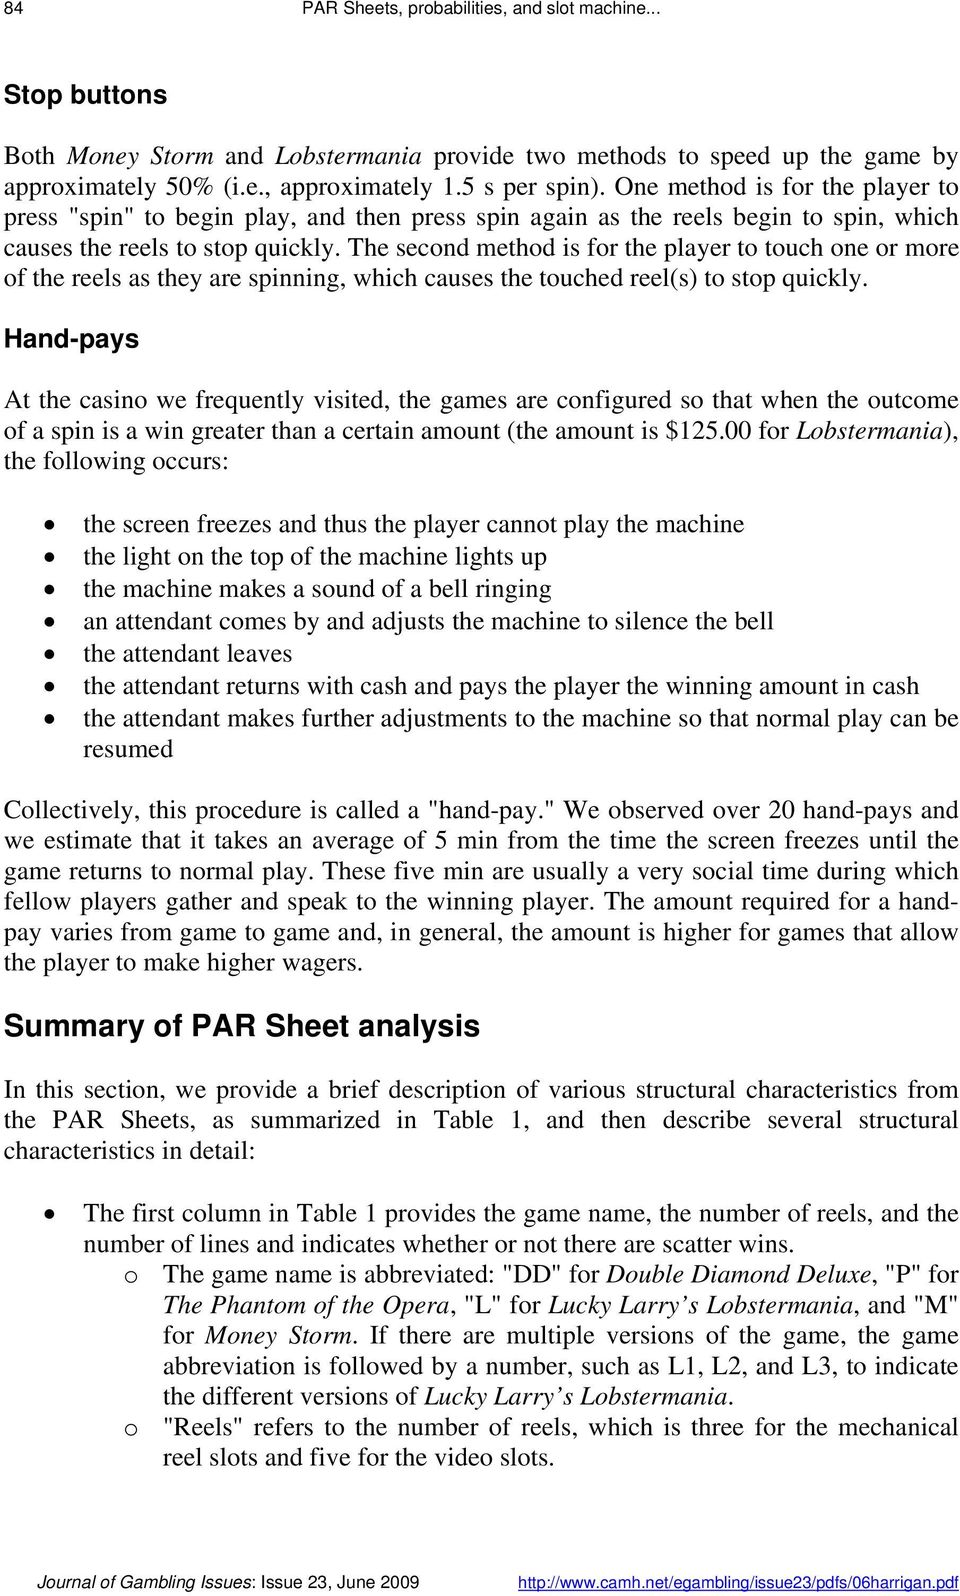 Understanding slot machine par sheets